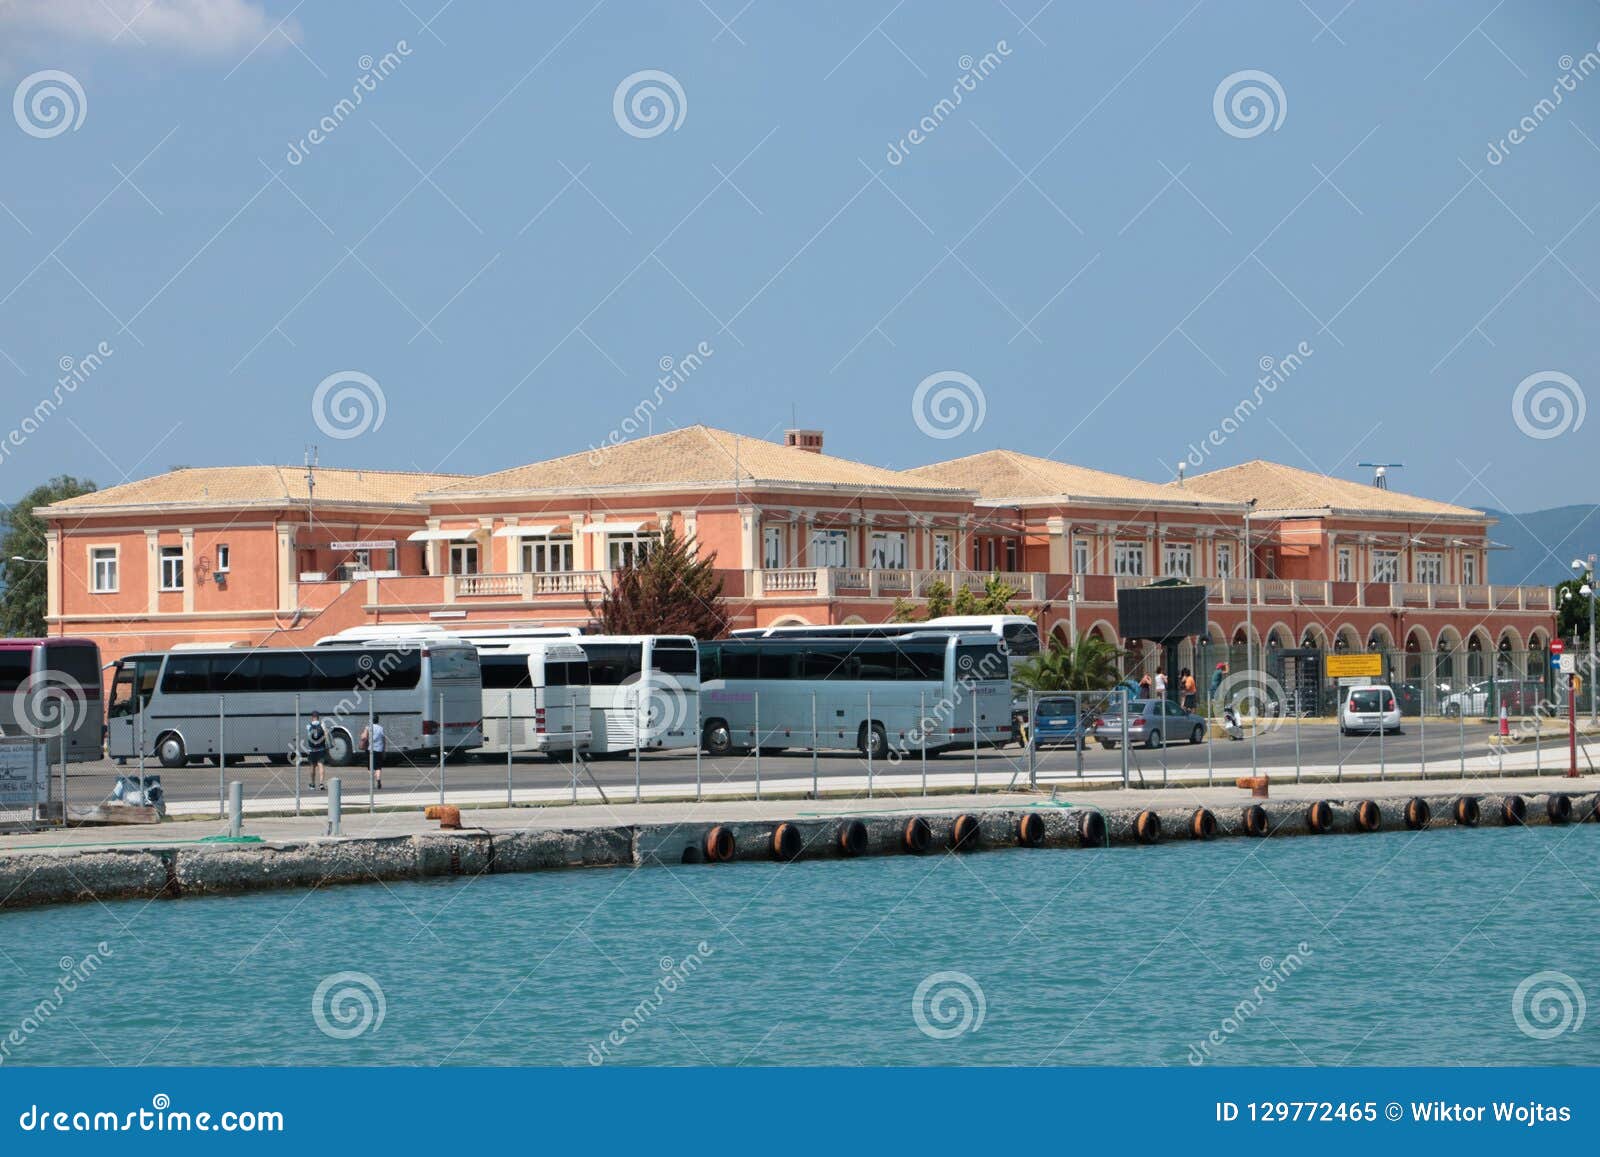 corfu cruise port